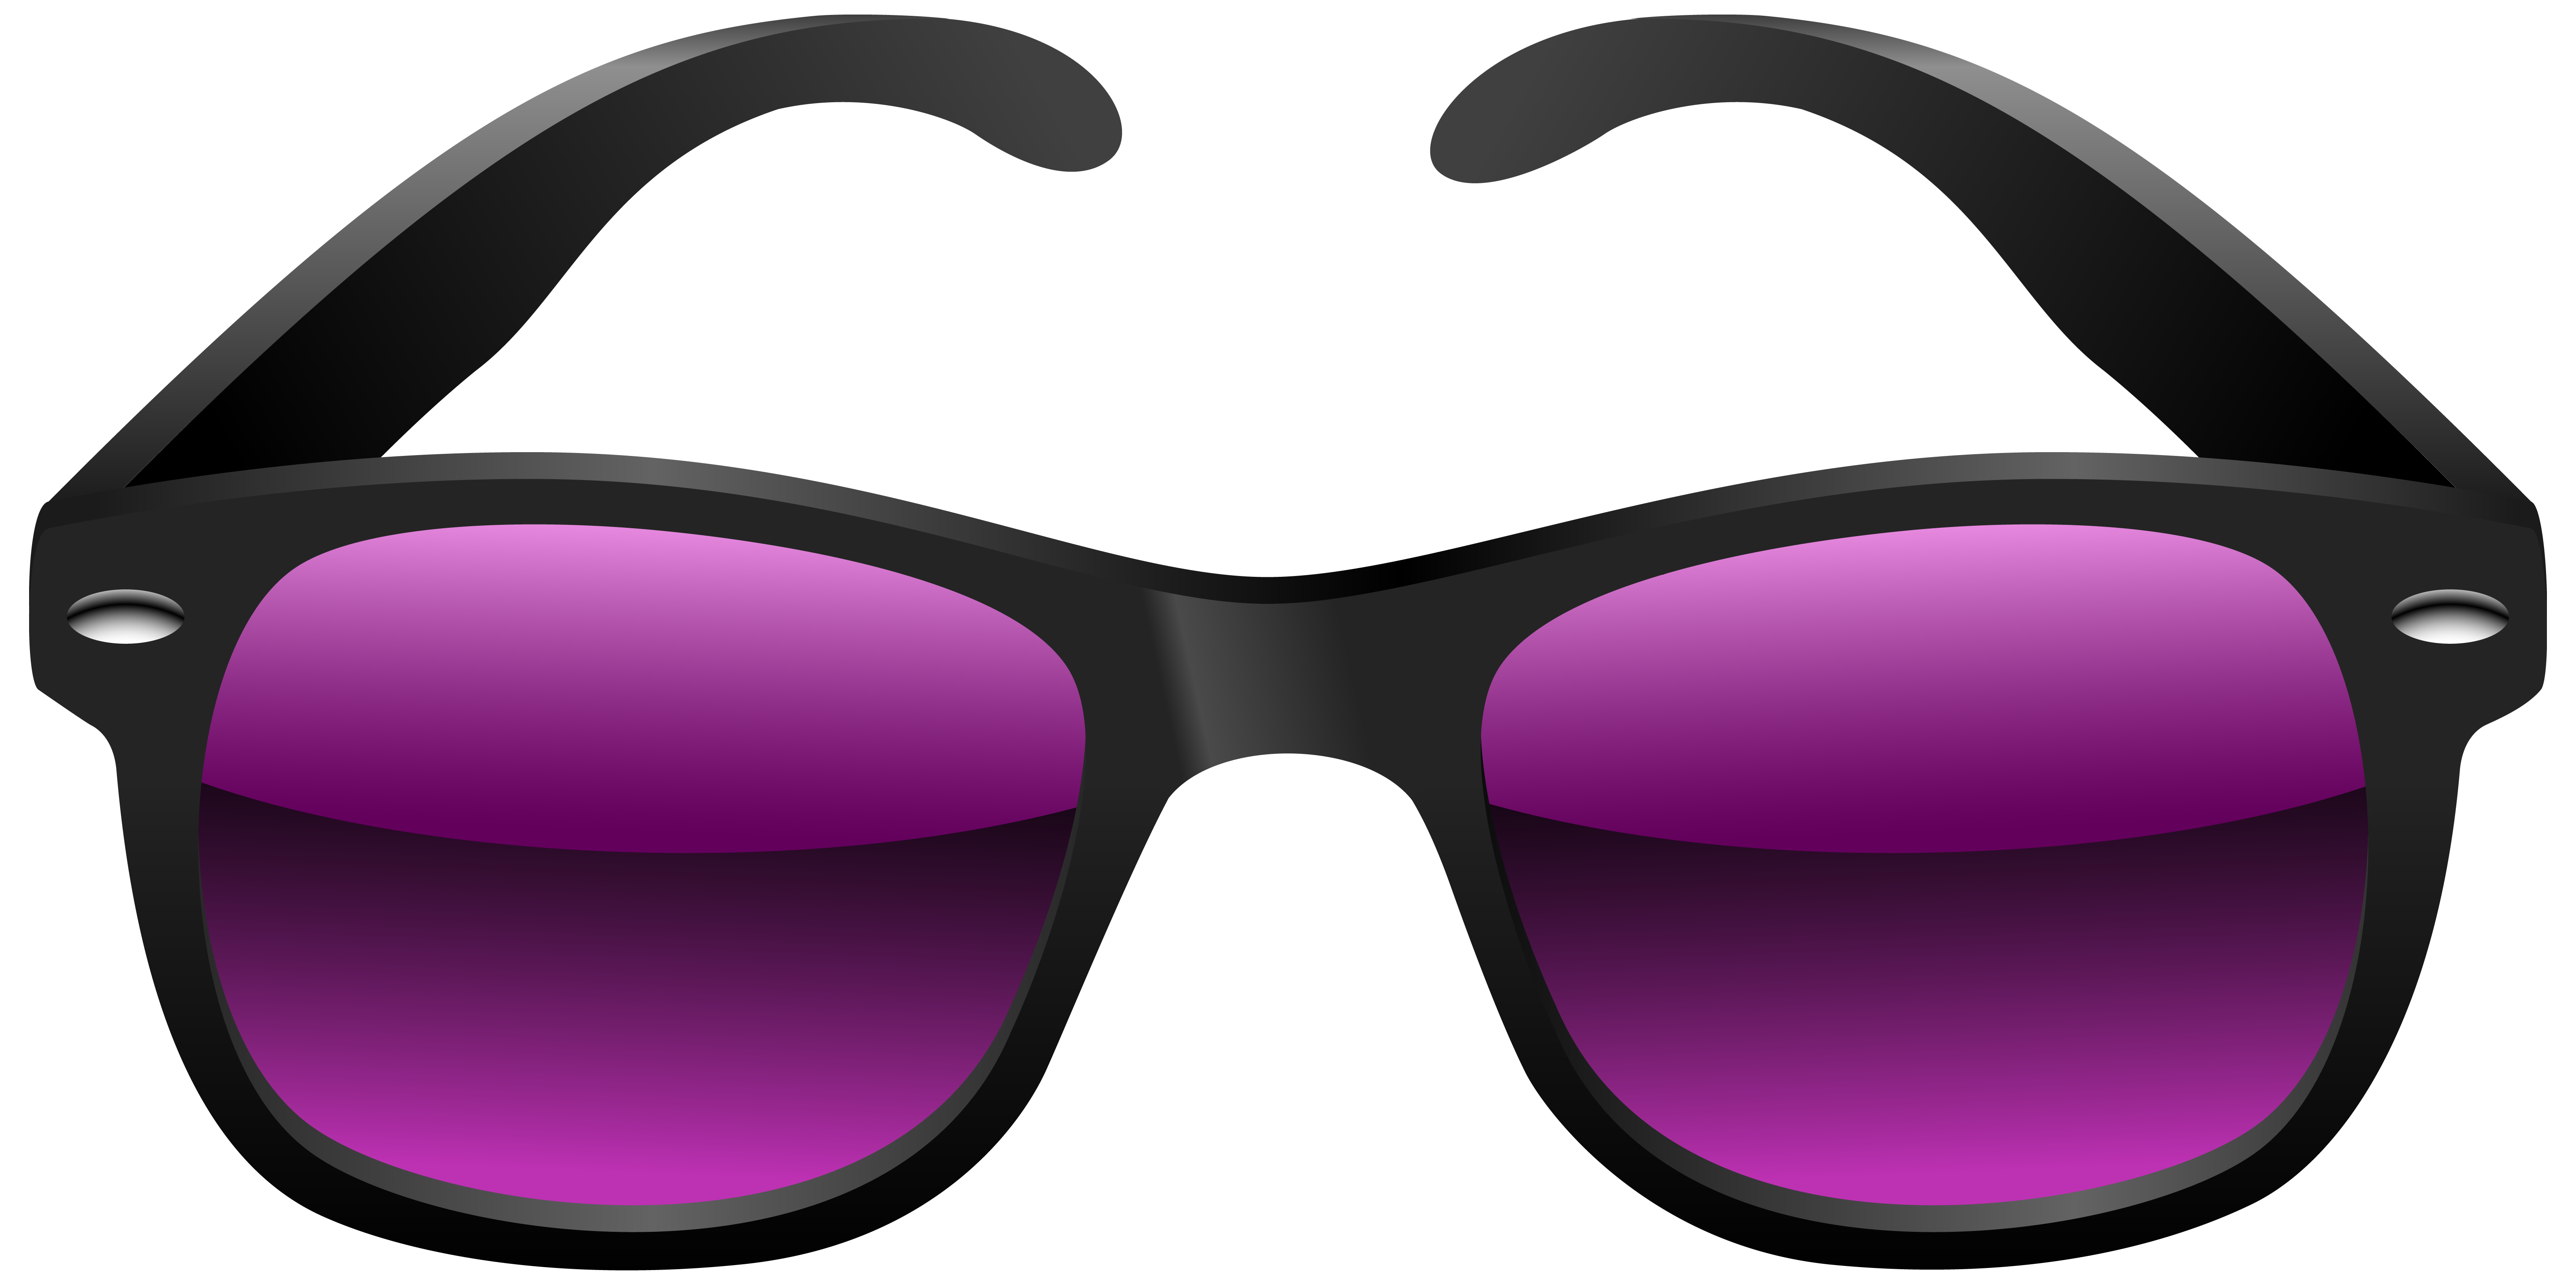 Clipart sunglasses. Black and purple image